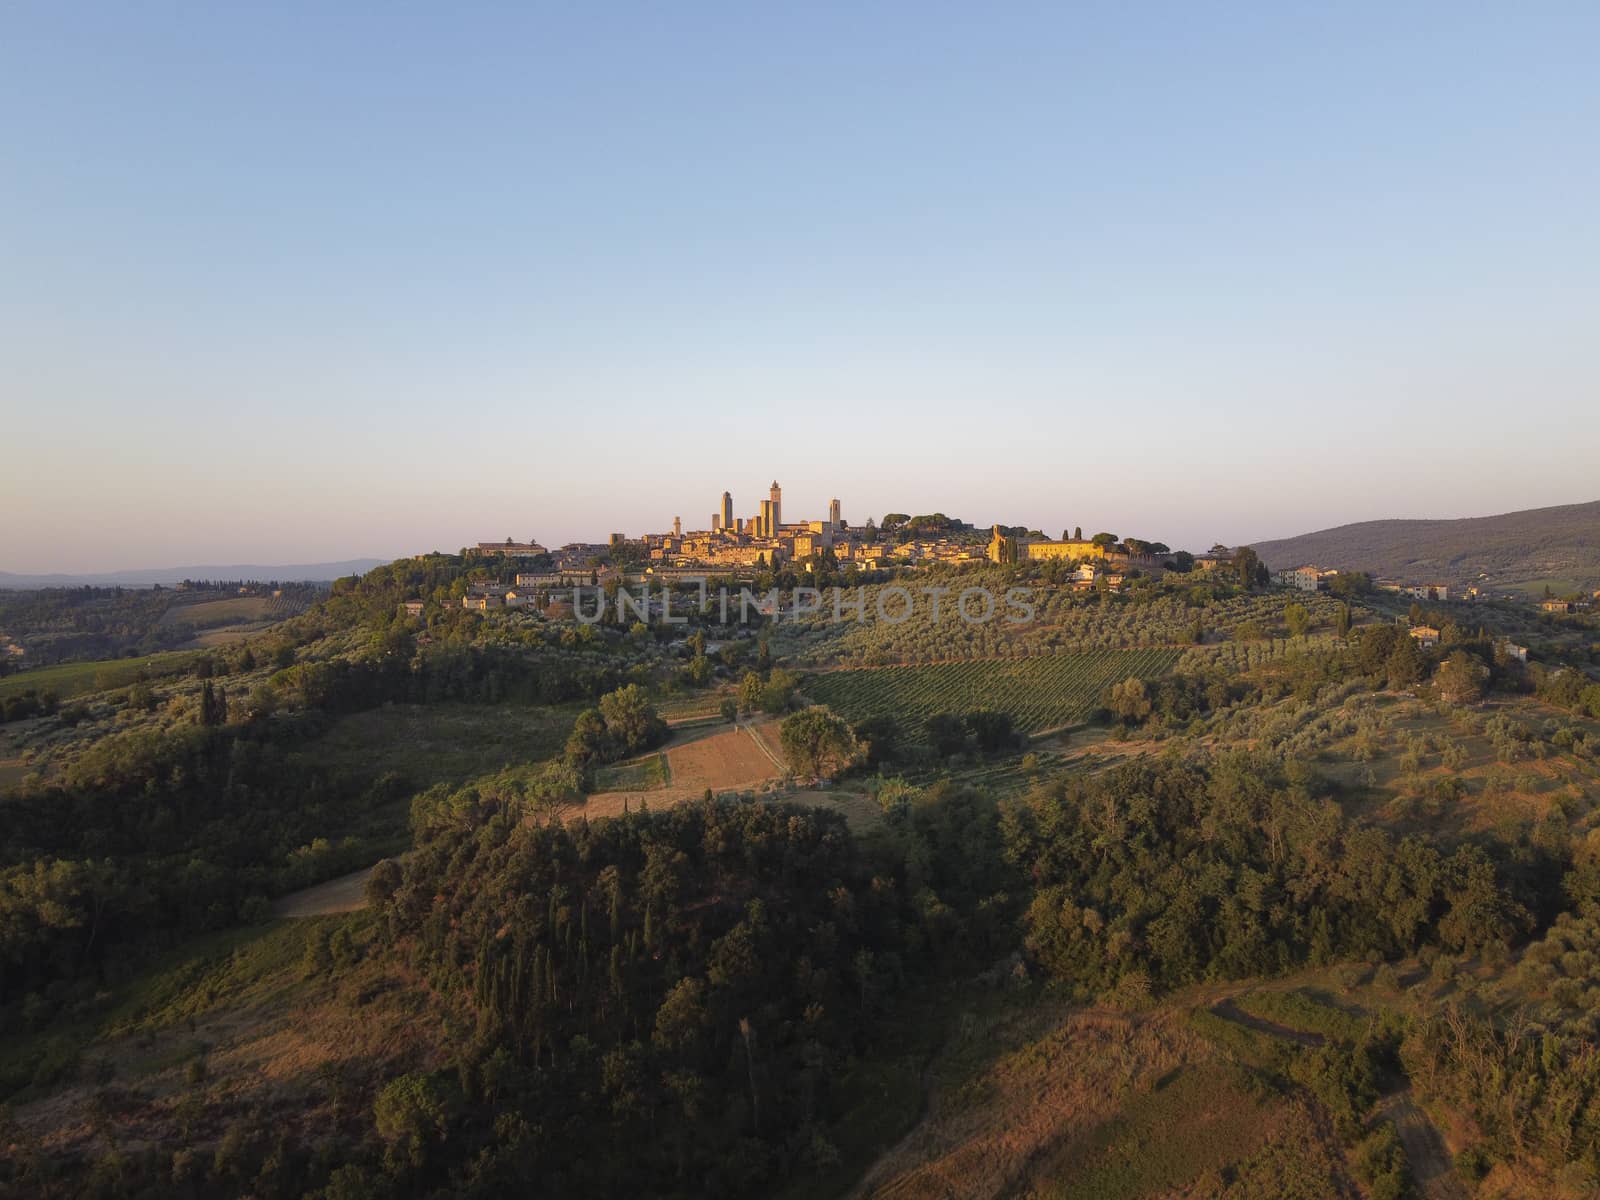 The medieval skyline of San Gimignano. Siena, Tuscany in Italy.